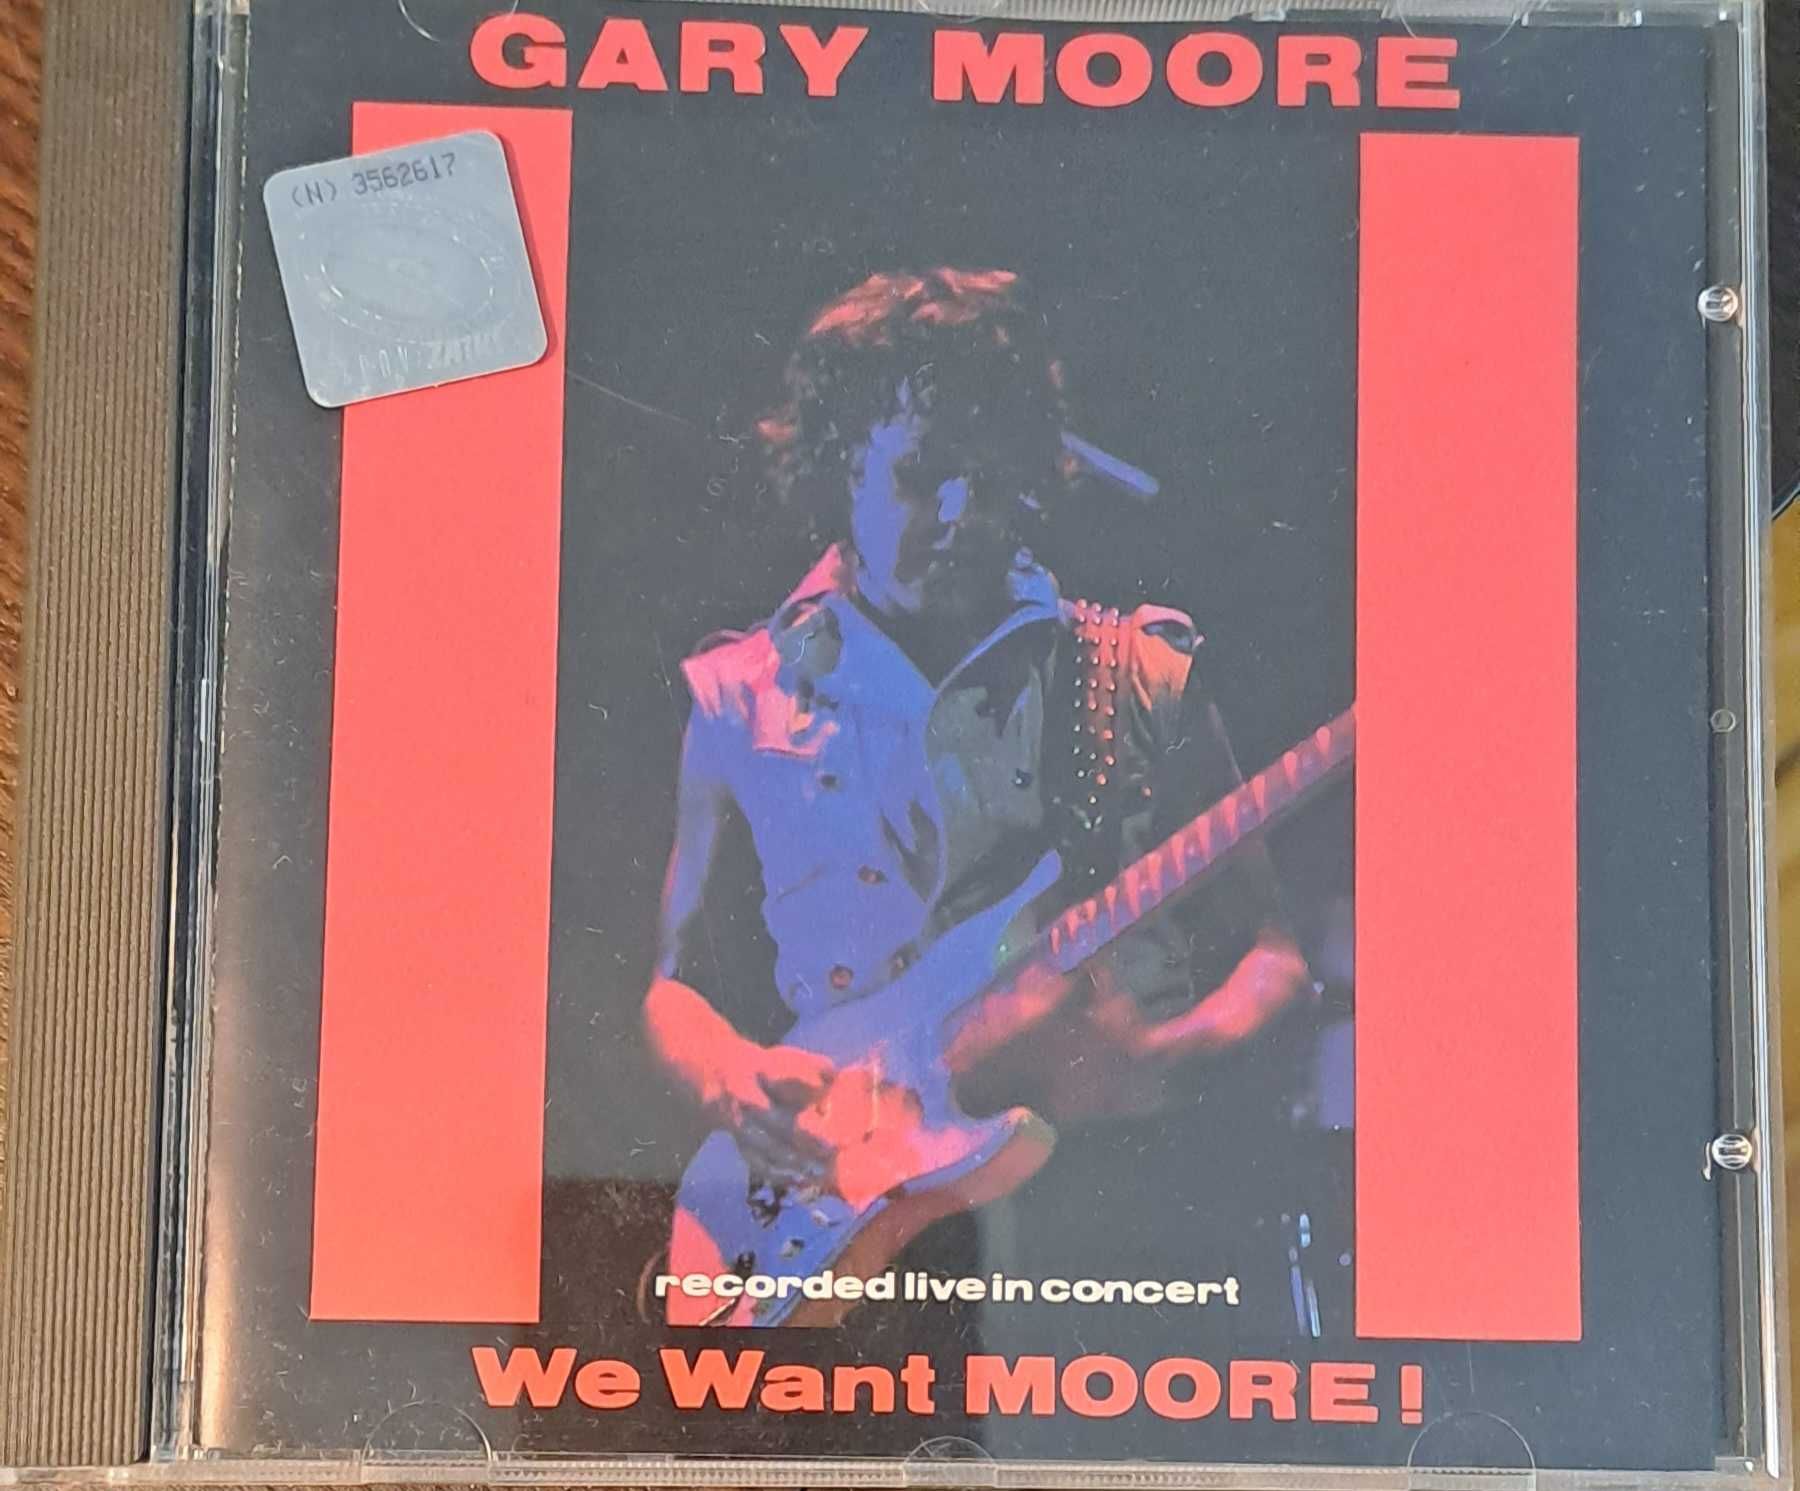 Gary Moore - "We Want Moore!"